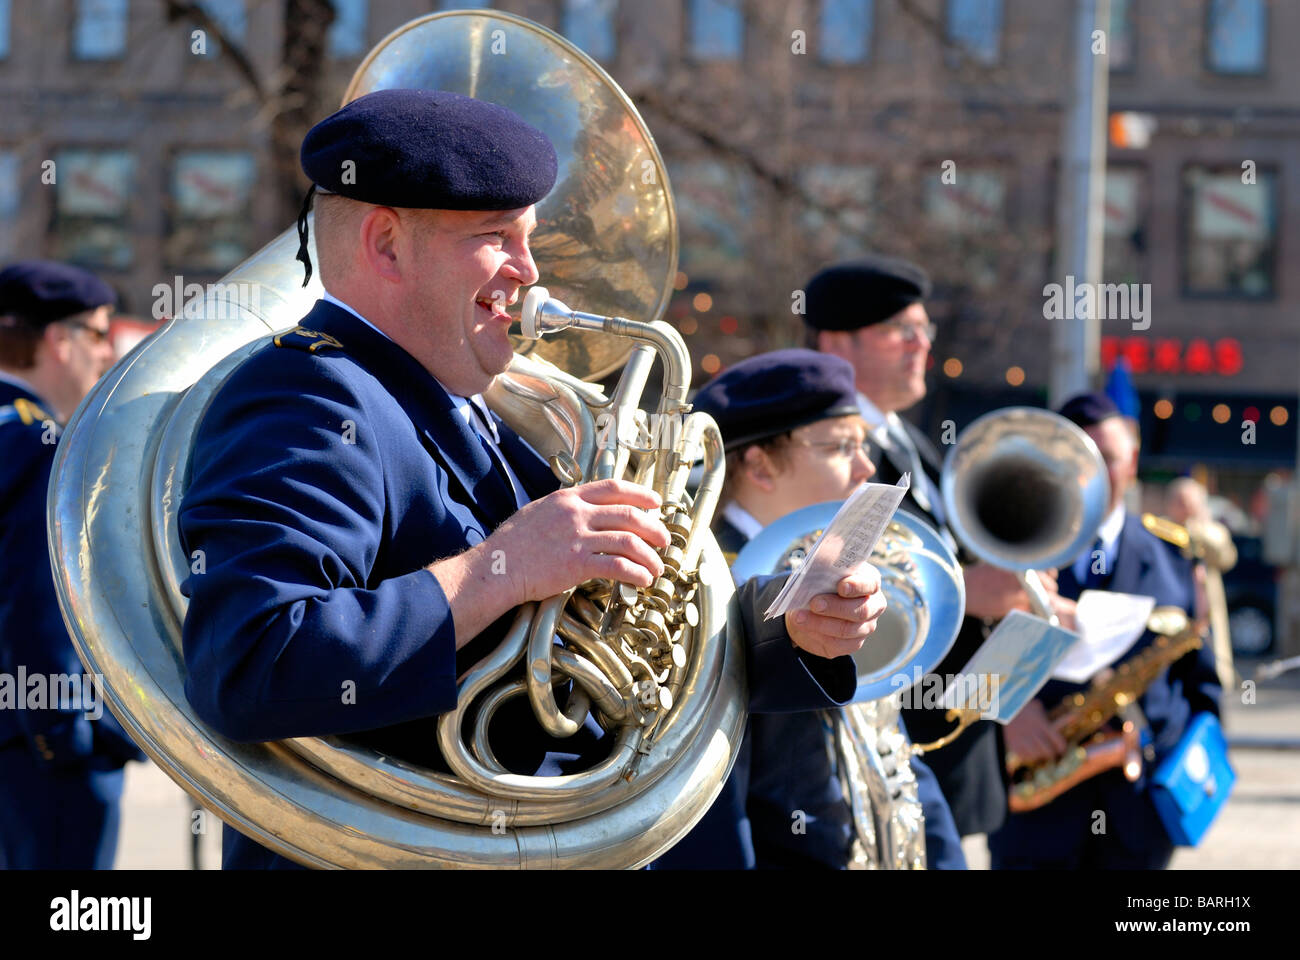 The Hyvinkäänkylä's Brass Band played music at the Finnish labour union, SAK, May Day parade. Helsinki, Finland, Scandinavia, EU Stock Photo